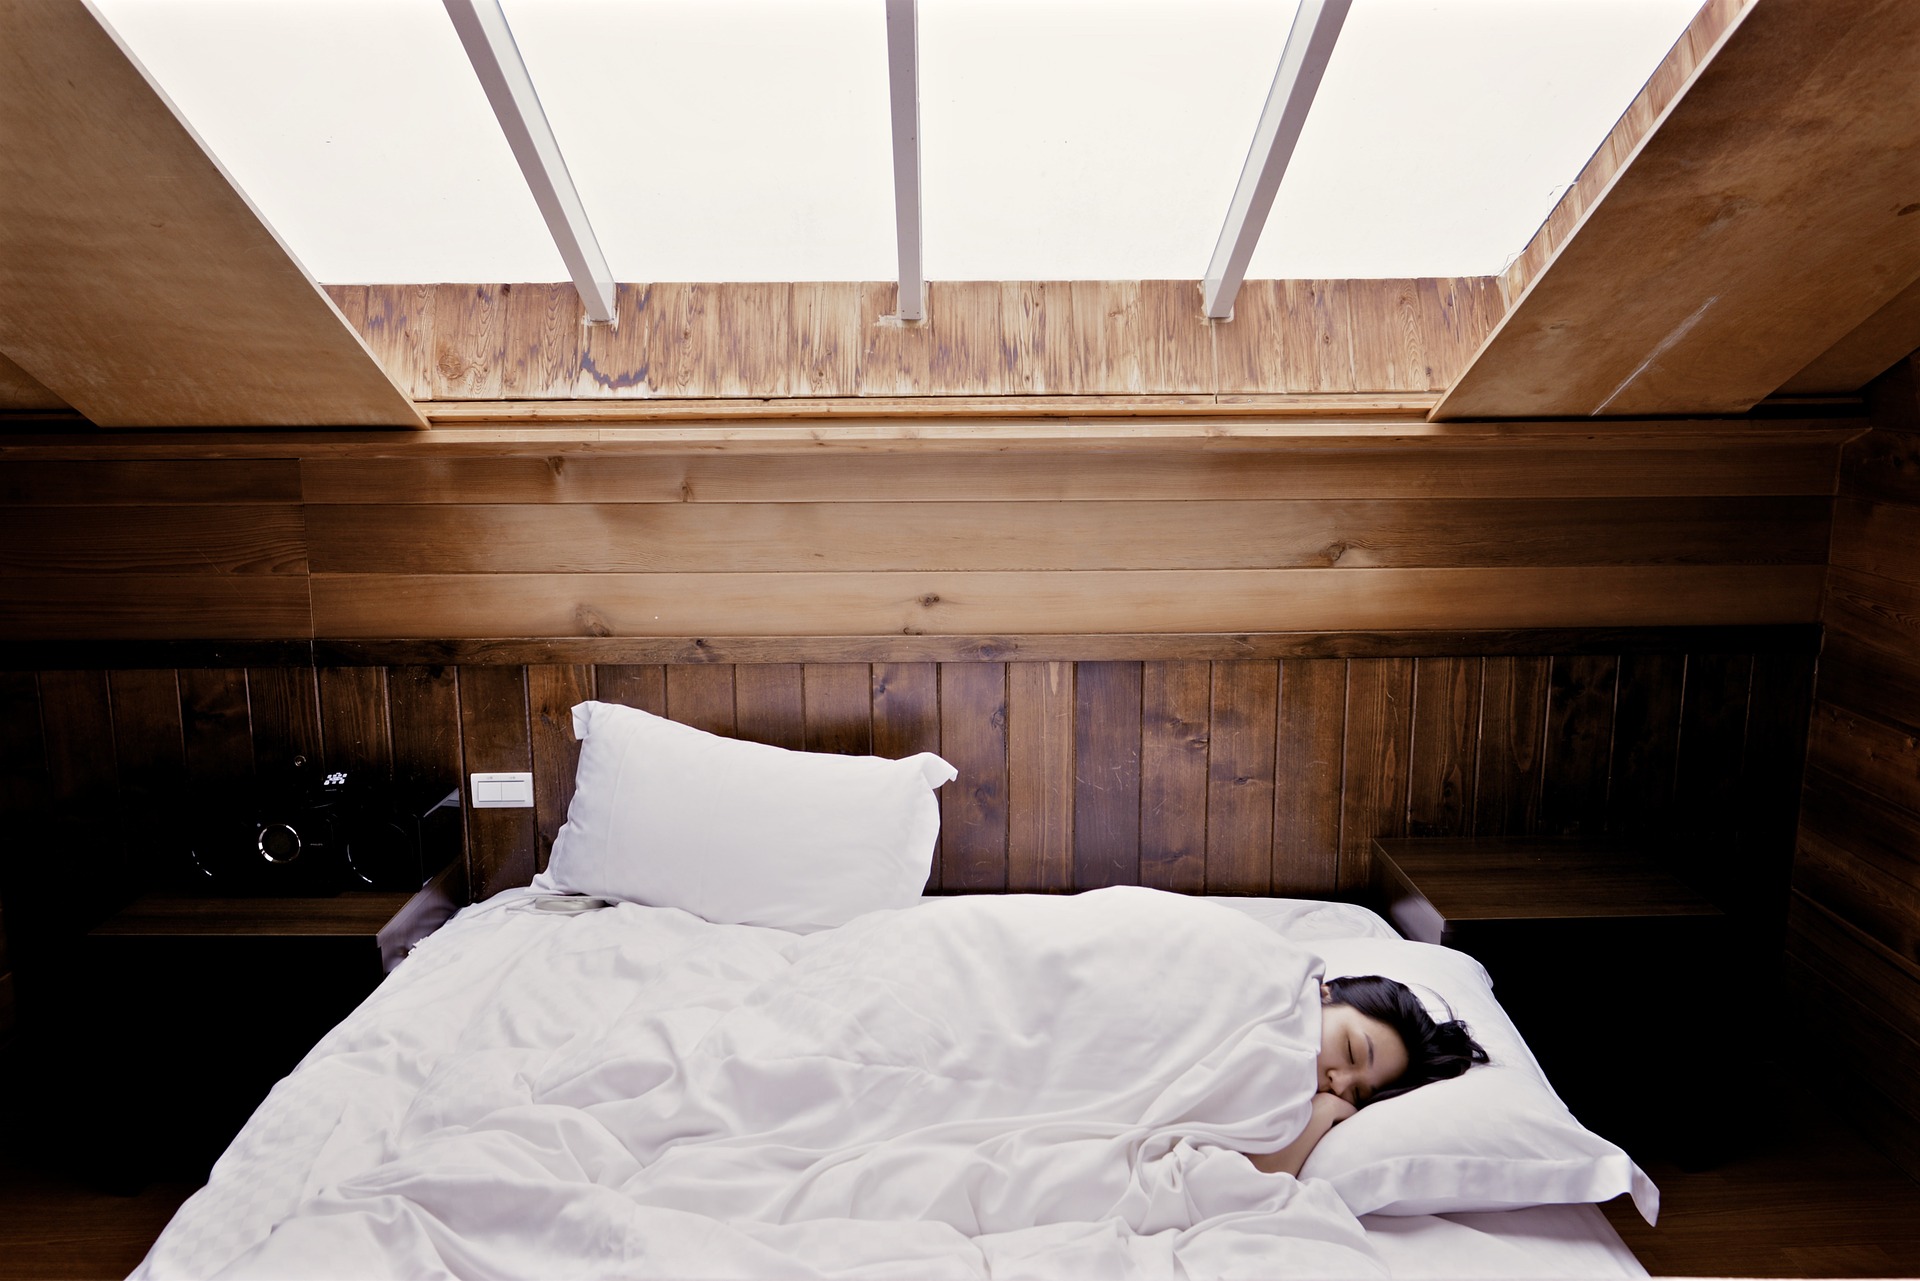 The Benefits of Sleeping in a Dark Room